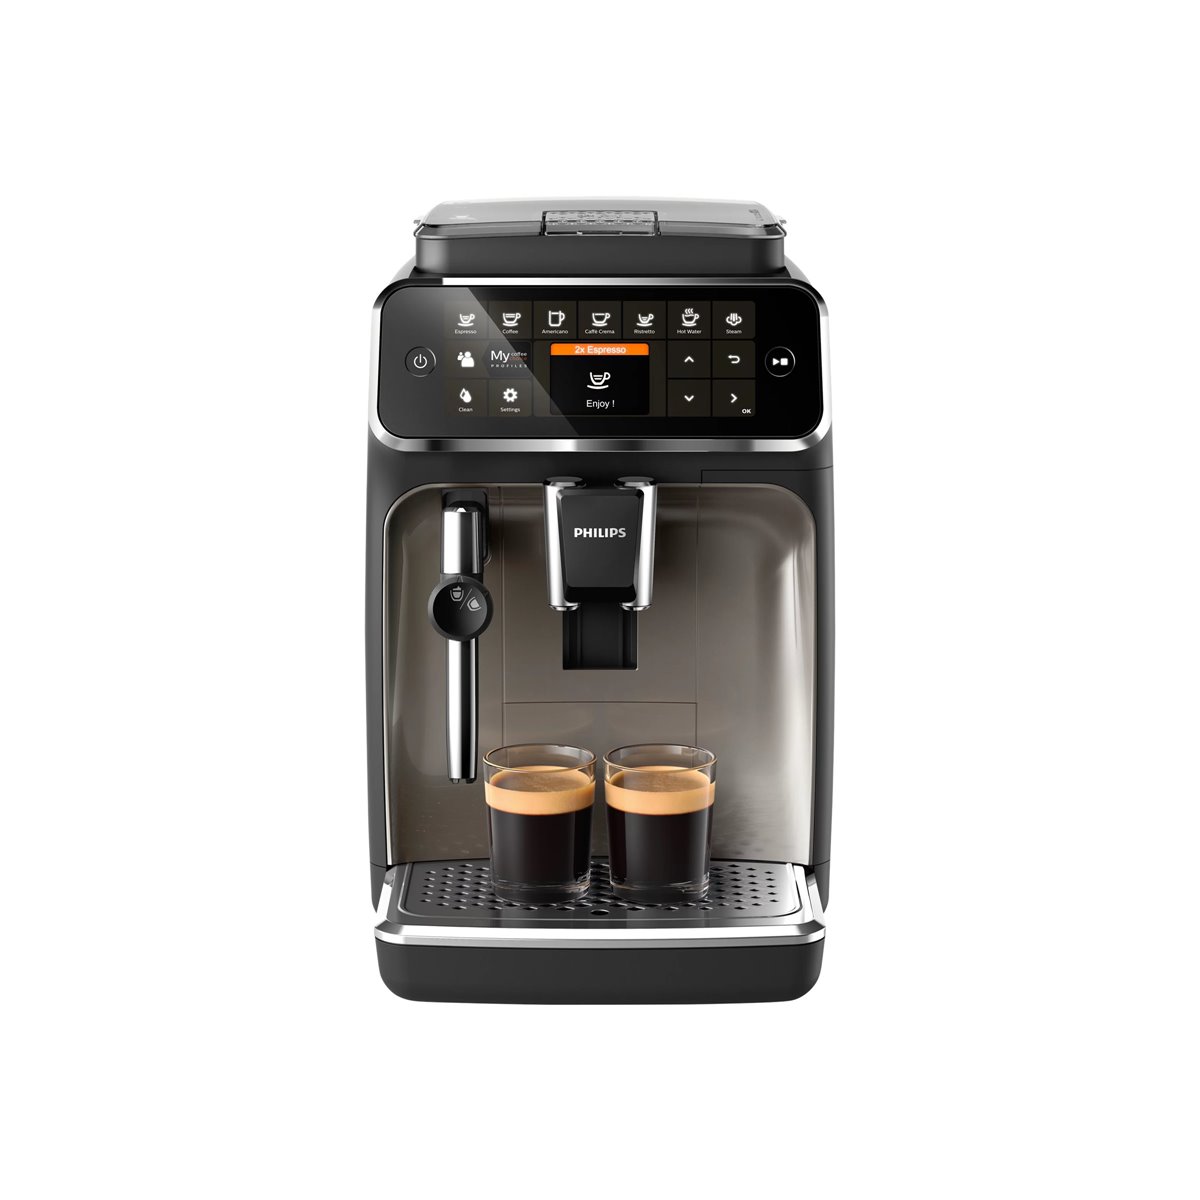 Philips 4300 series EP4327-90 - Espresso machine - 1.8 L - Coffee beans - Built-in grinder - 1500 W - Black - Chrome